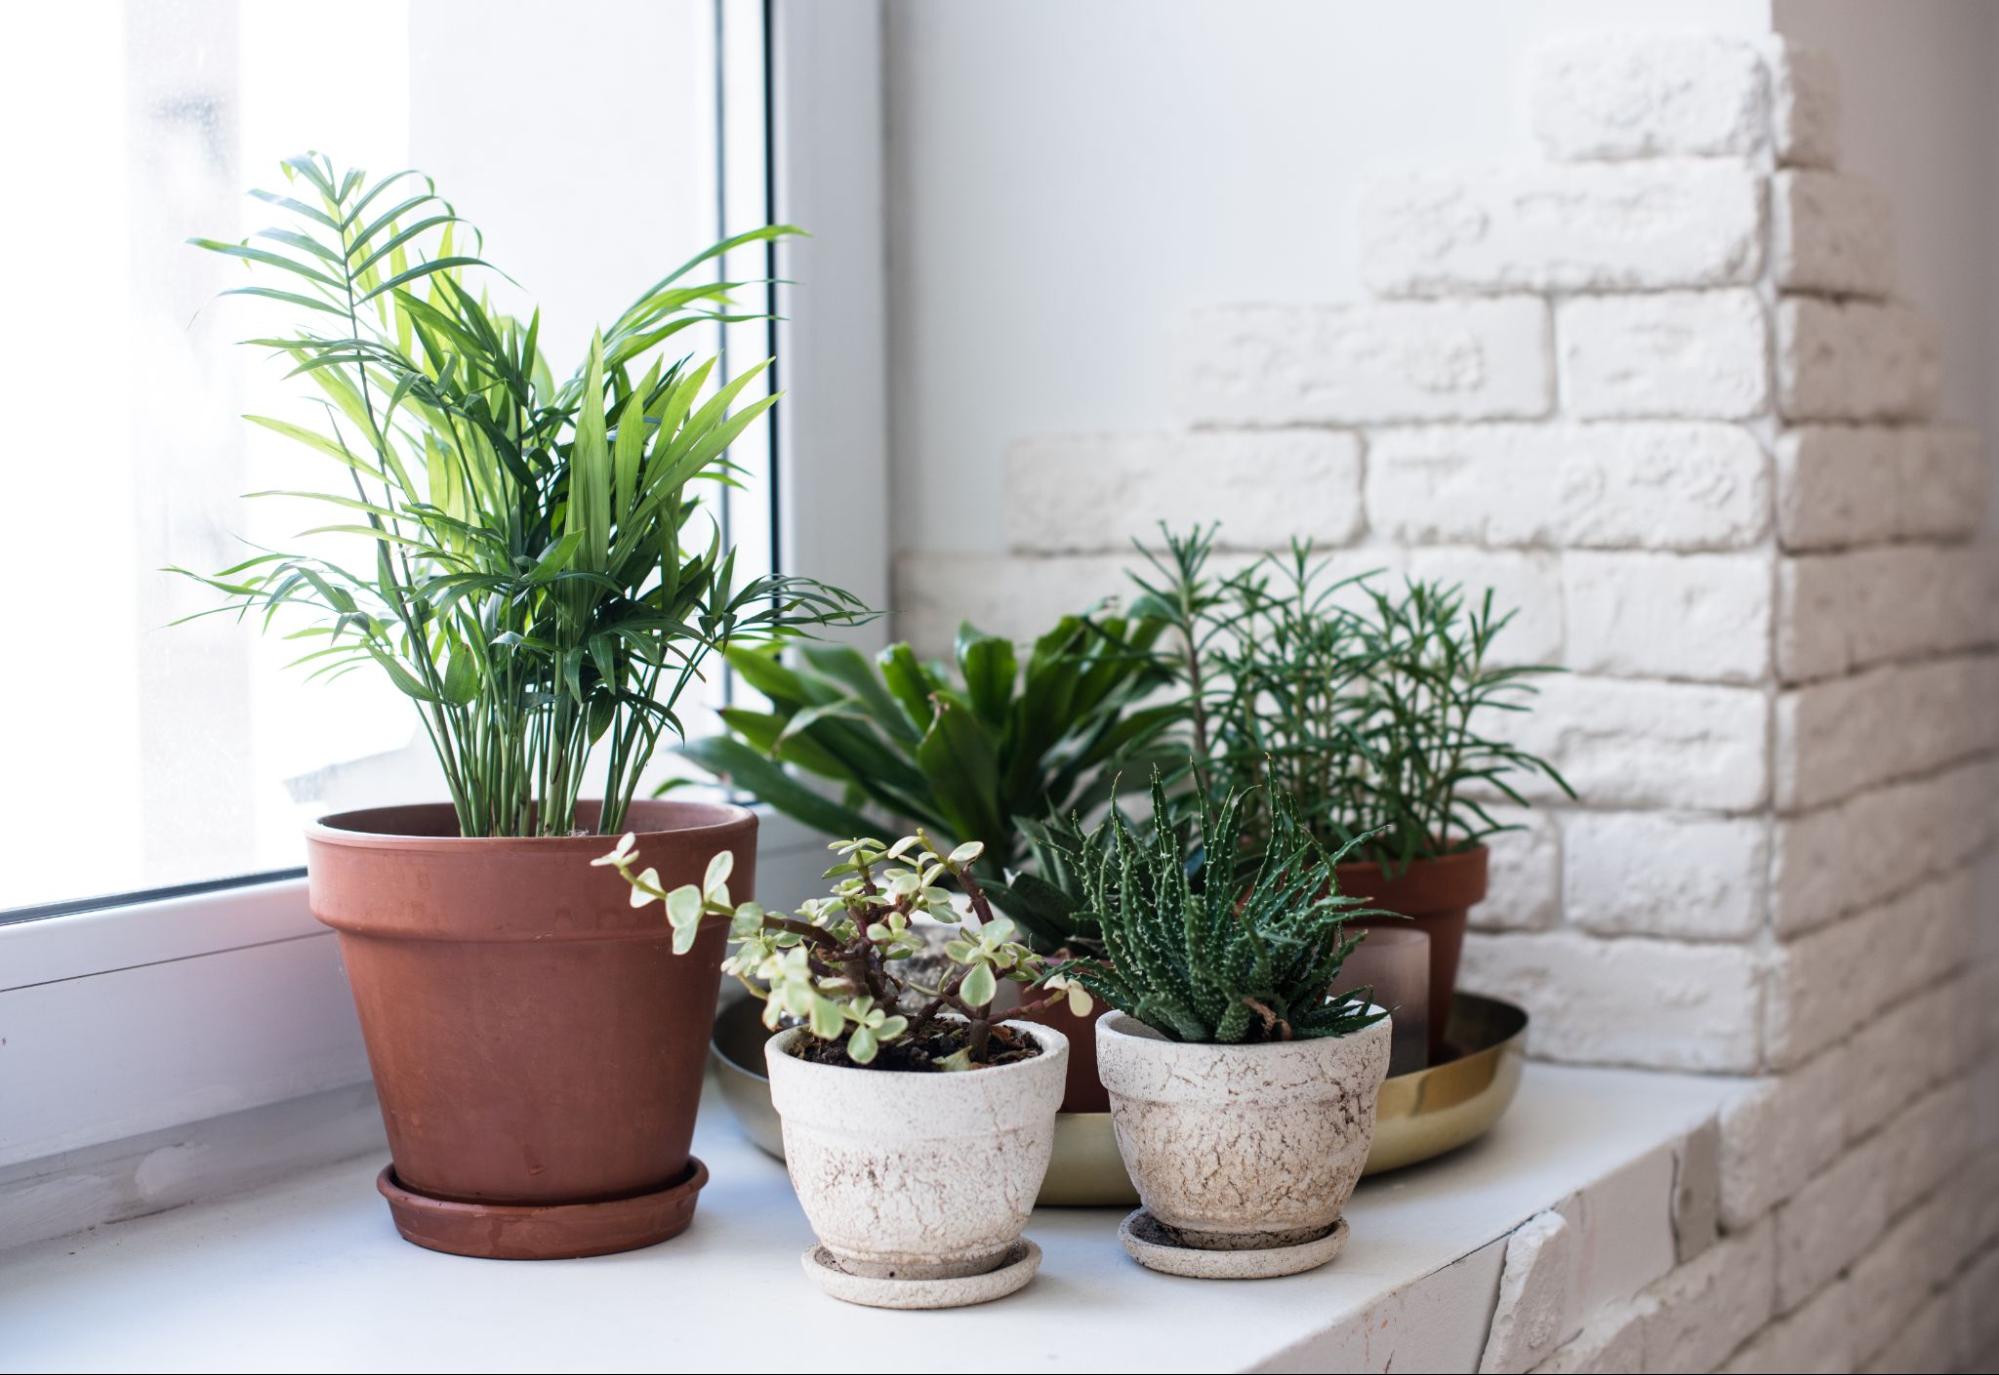 Plants on a windowsill that gets medium, indirect light.